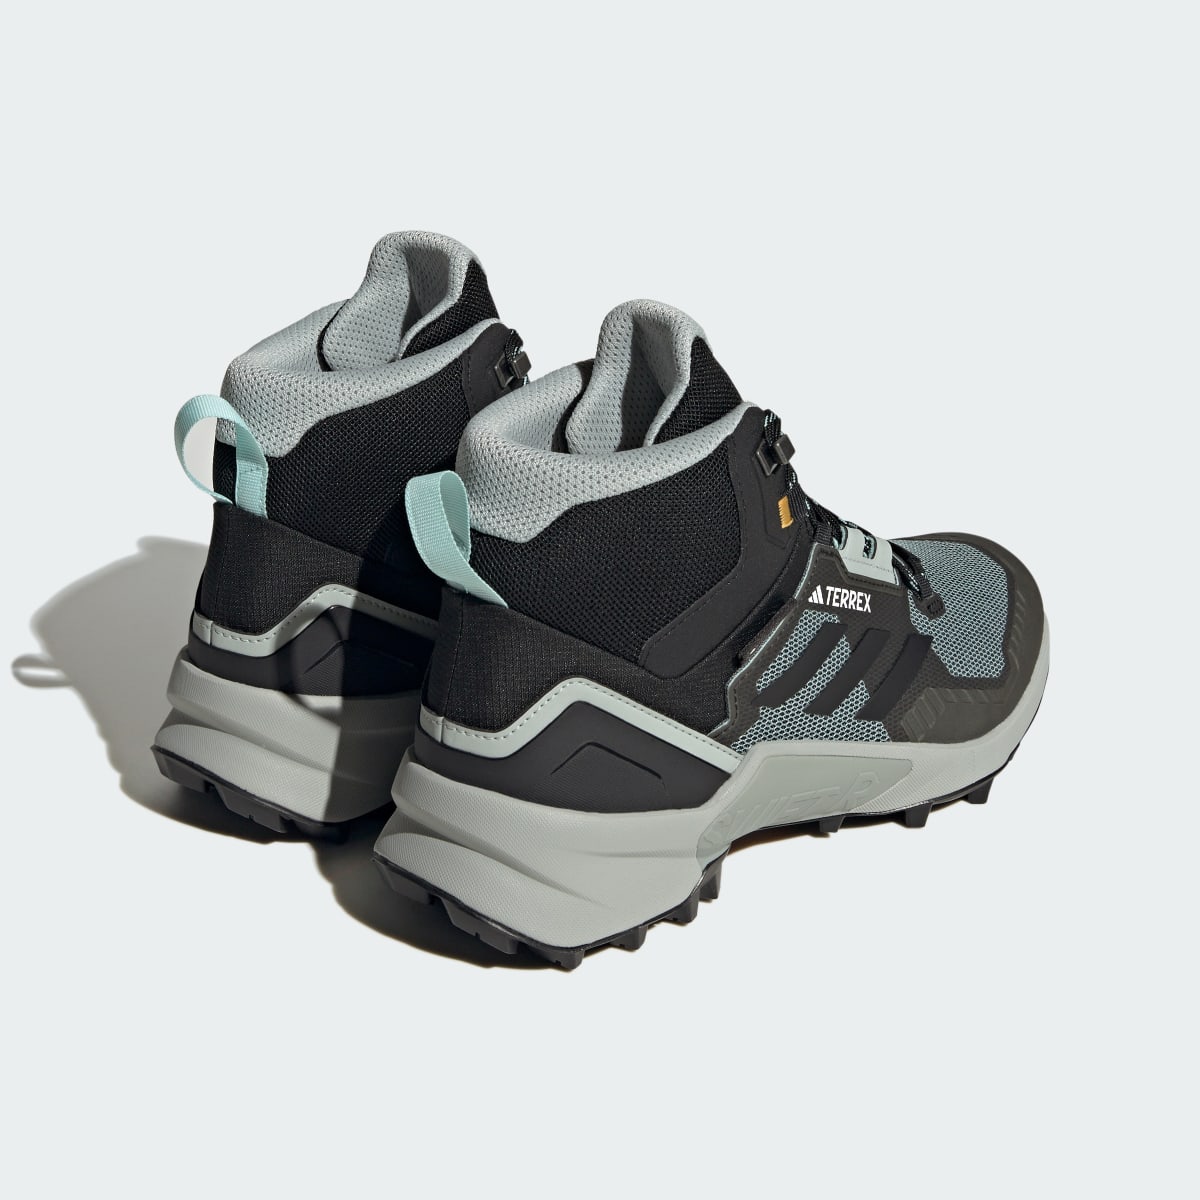 Adidas Chaussure de randonnée Terrex Swift R3 Mid GORE-TEX. 10